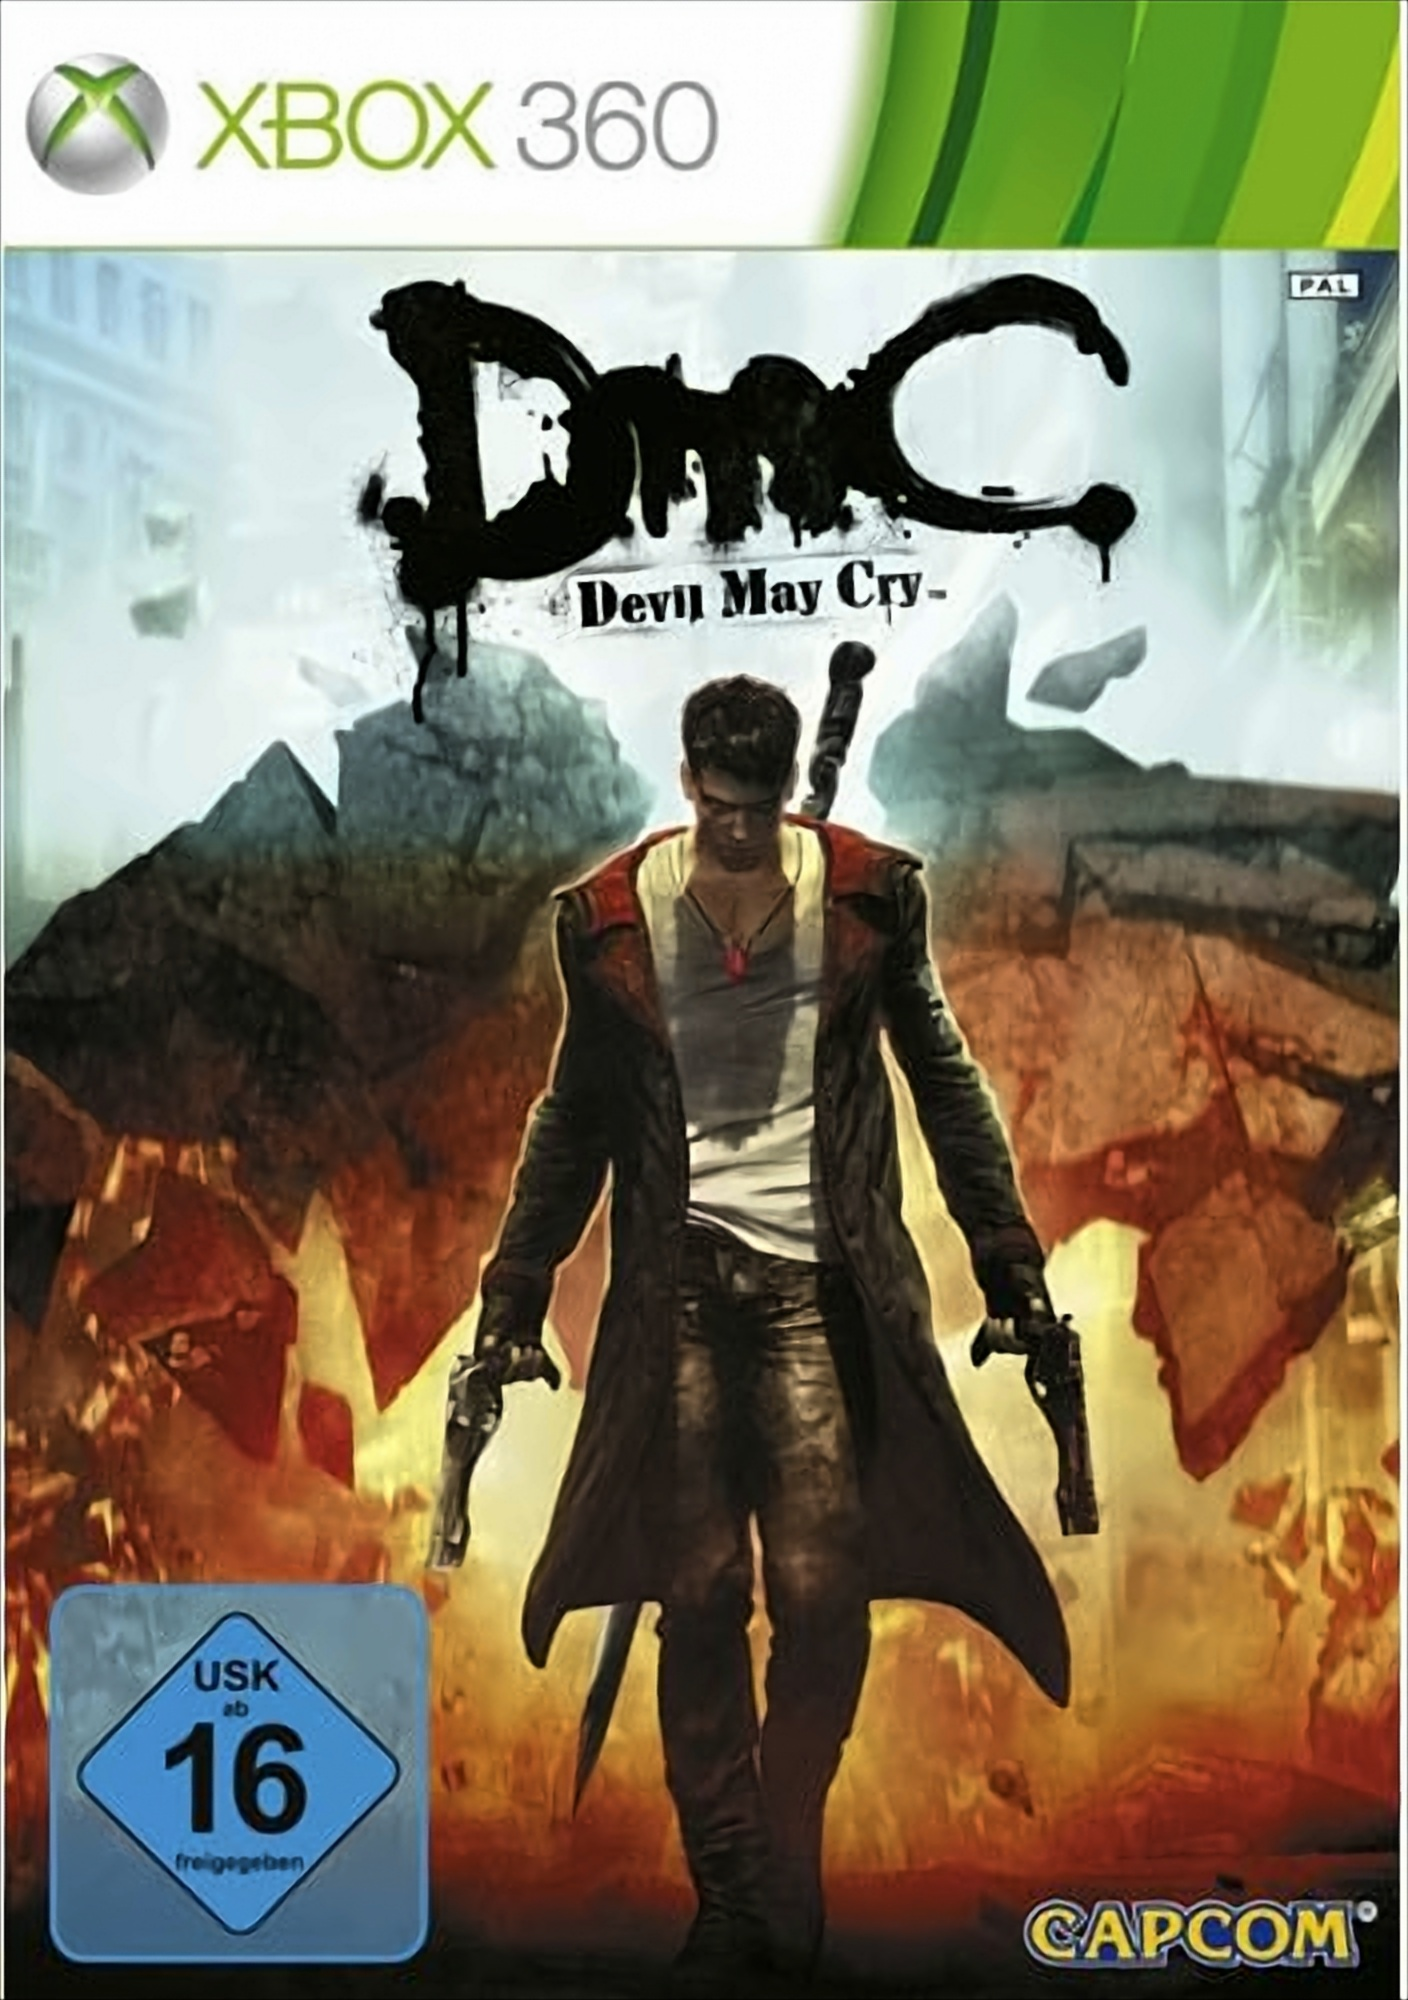 Cry May 5 360] [Xbox Devil DmC -